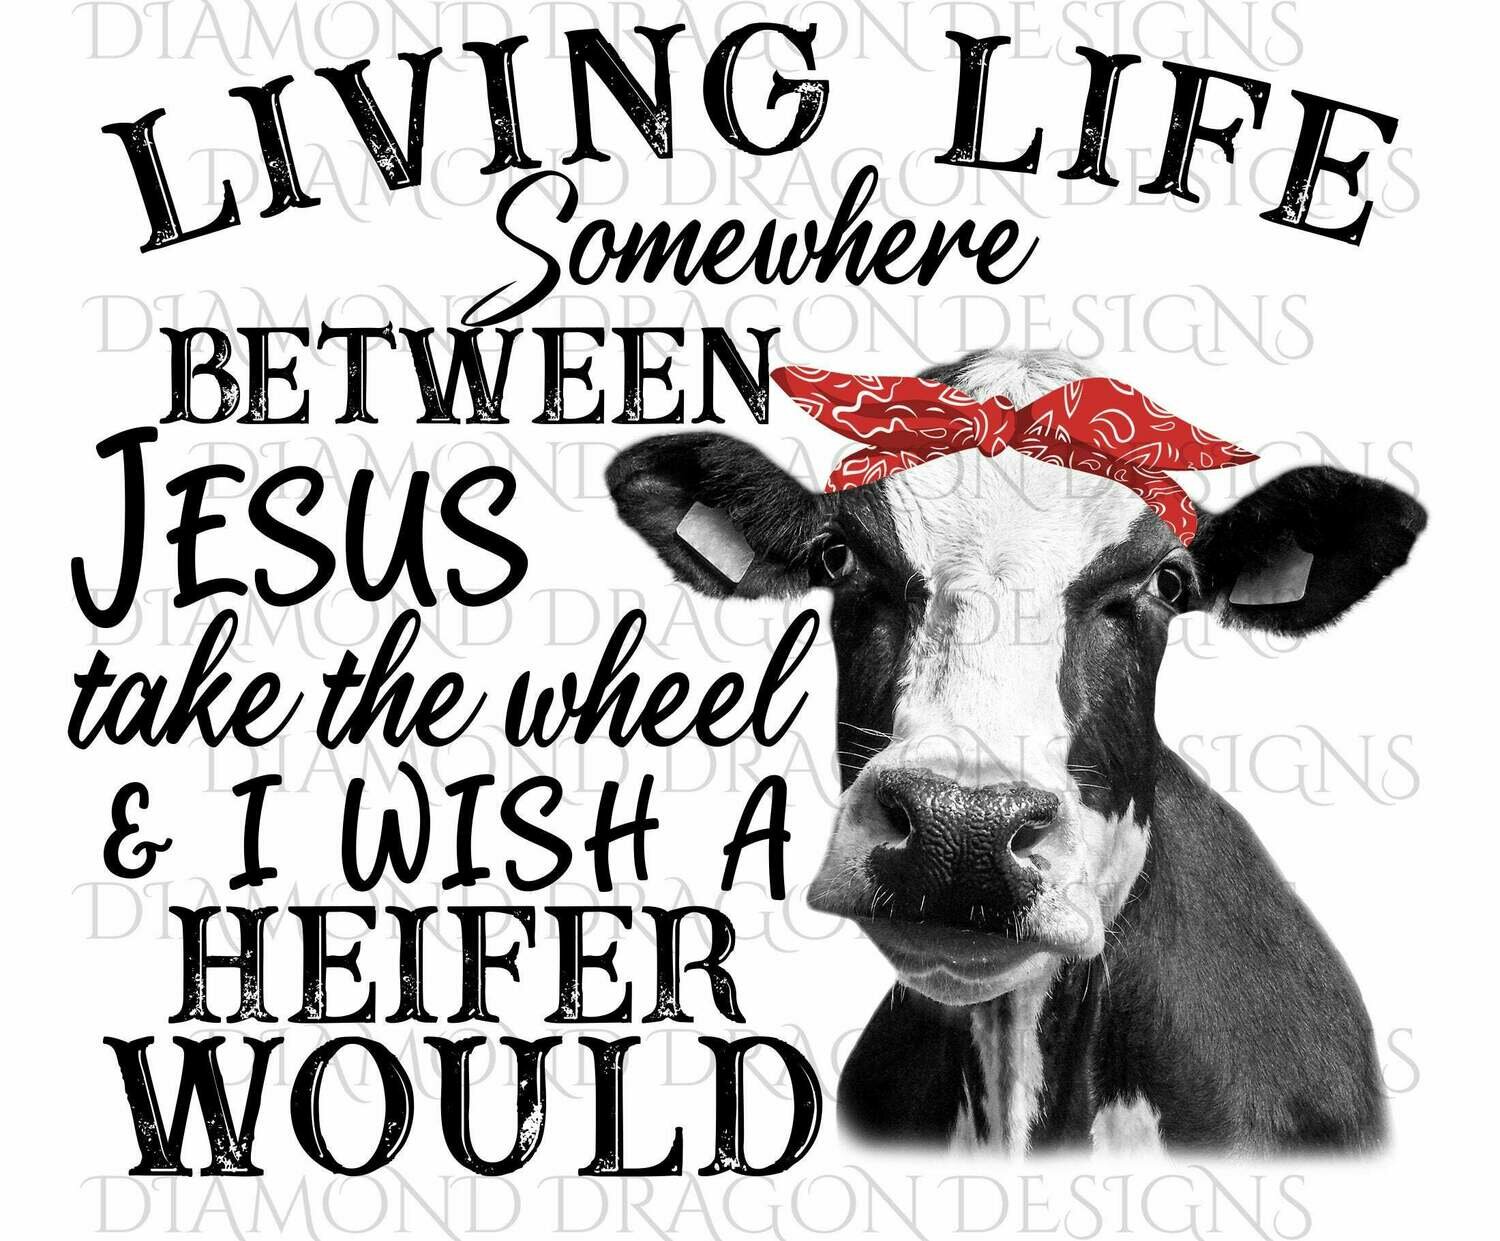 Cows - Heifer, Living Life Somewhere Between Jesus Take the Wheel & I Wish a Heifer Would, Red Bandana, Waterslide